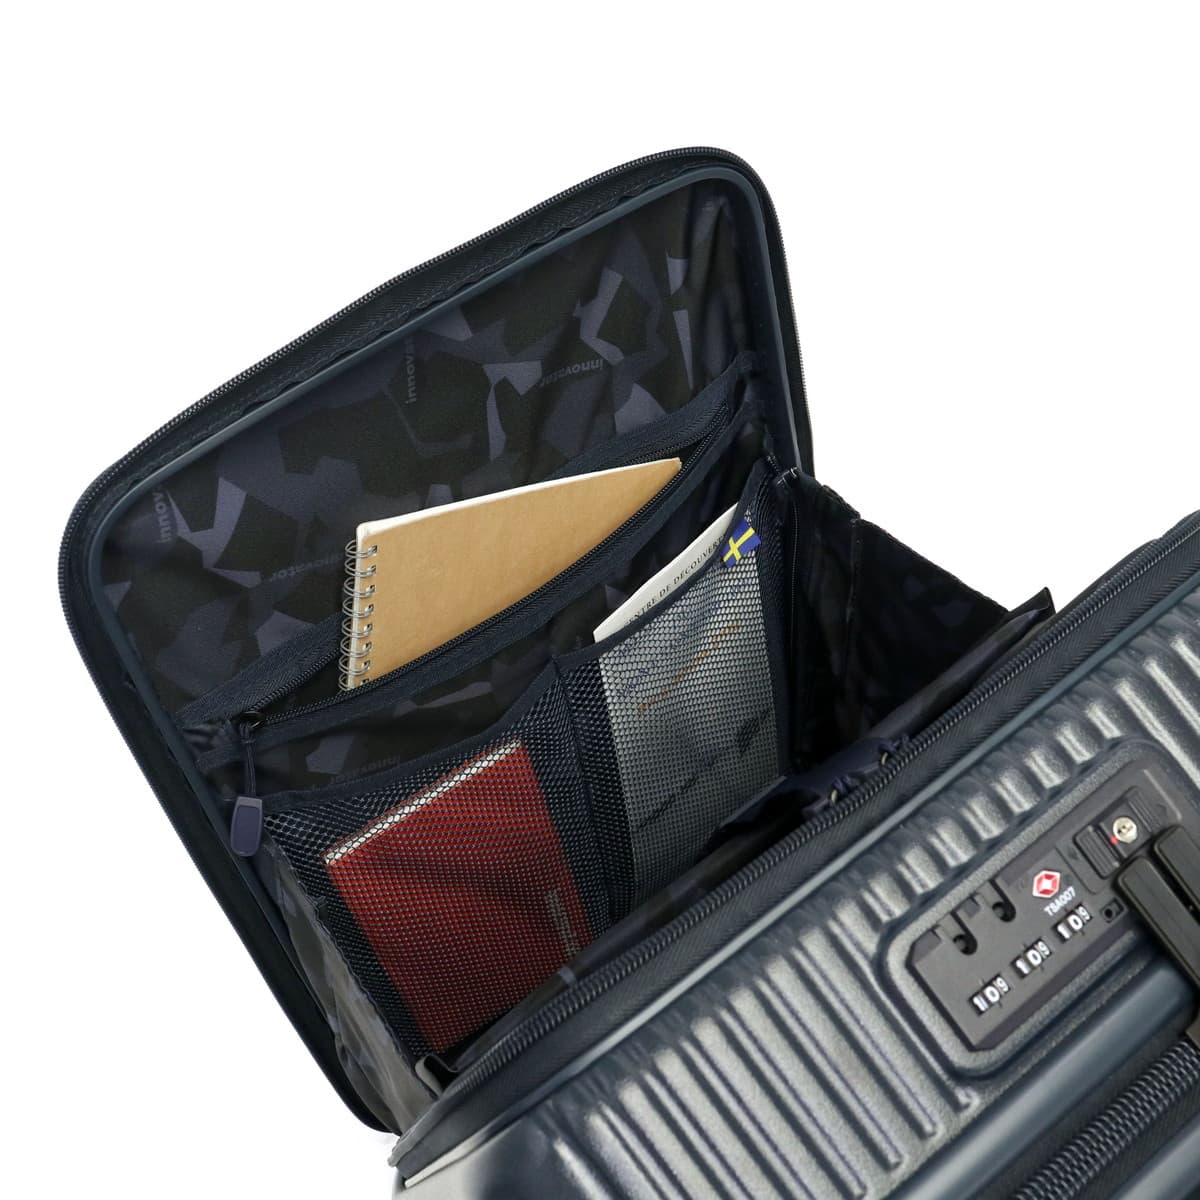 innovator イノベーター 機内持ち込み対応スーツケース 38L INV50 